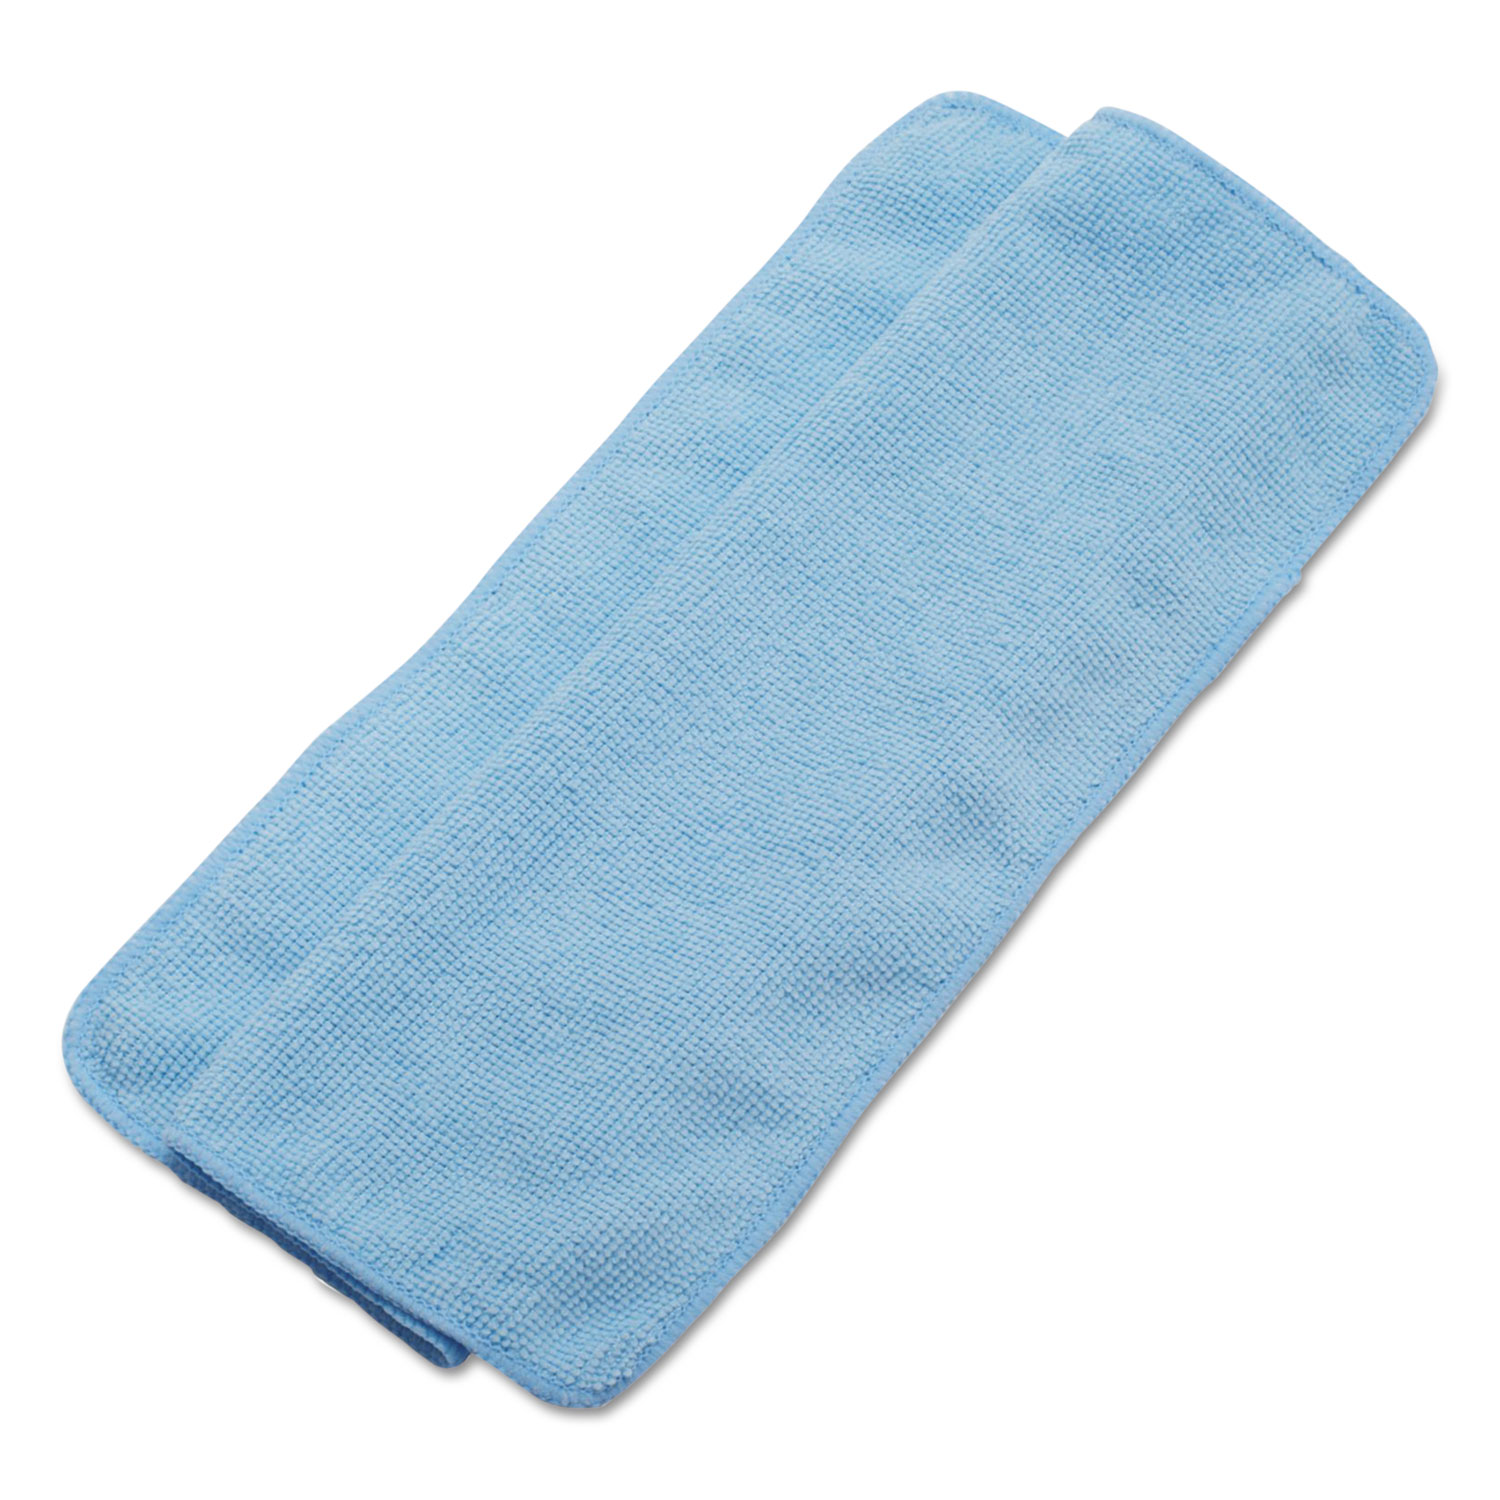  Boardwalk 1889795 Lightweight Microfiber Cleaning Cloths, Blue,16 x 16, 24/Pack (BWK16BLUCLOTH) 